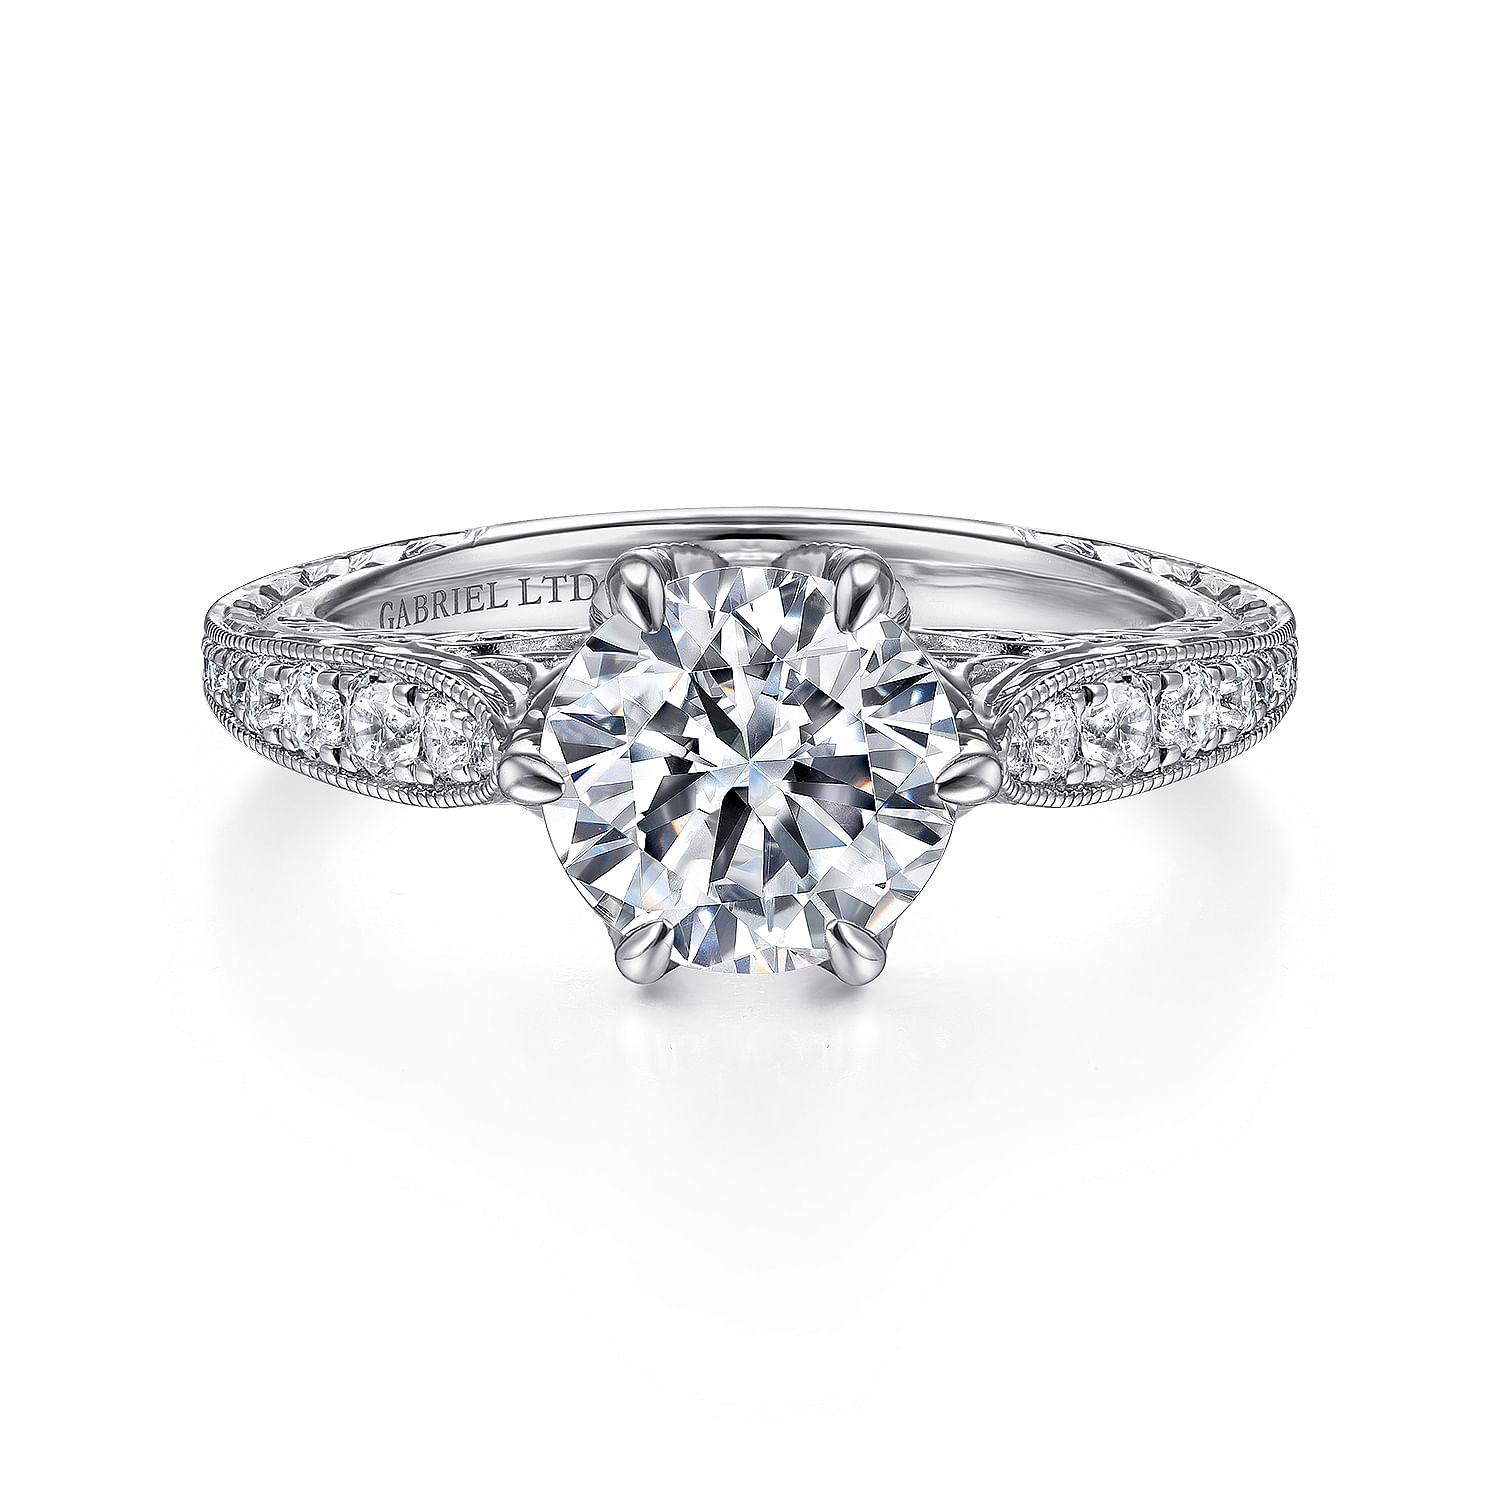 Gabriel - Vintage Inspired 18K White Gold Round Diamond Engagement Ring